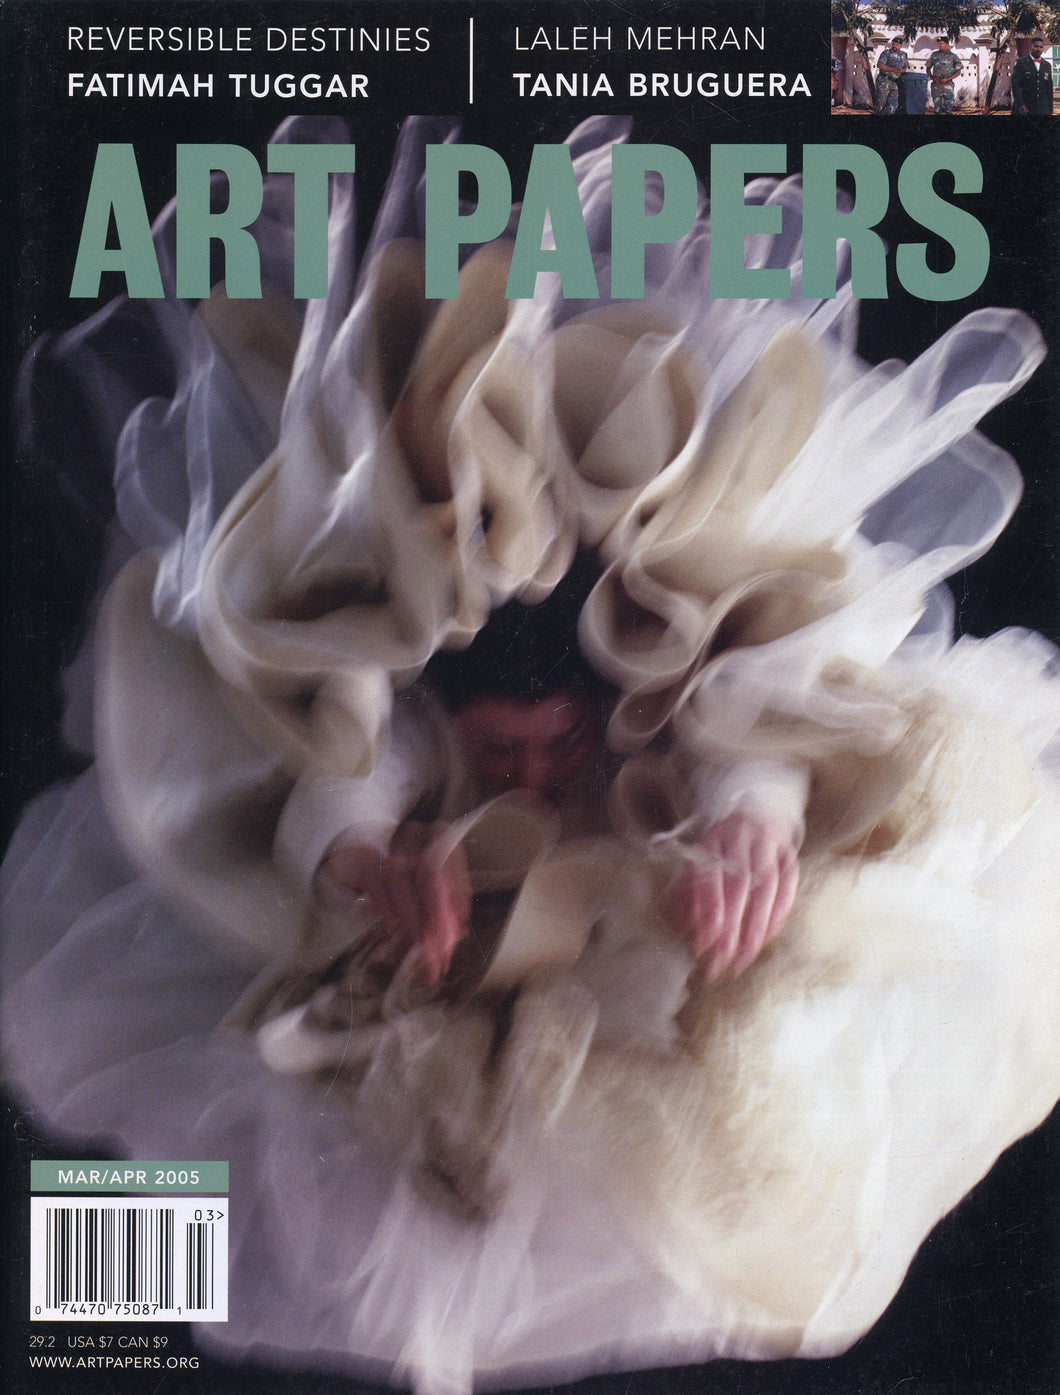 ART PAPERS 29.02 - Mar/Apr 2005